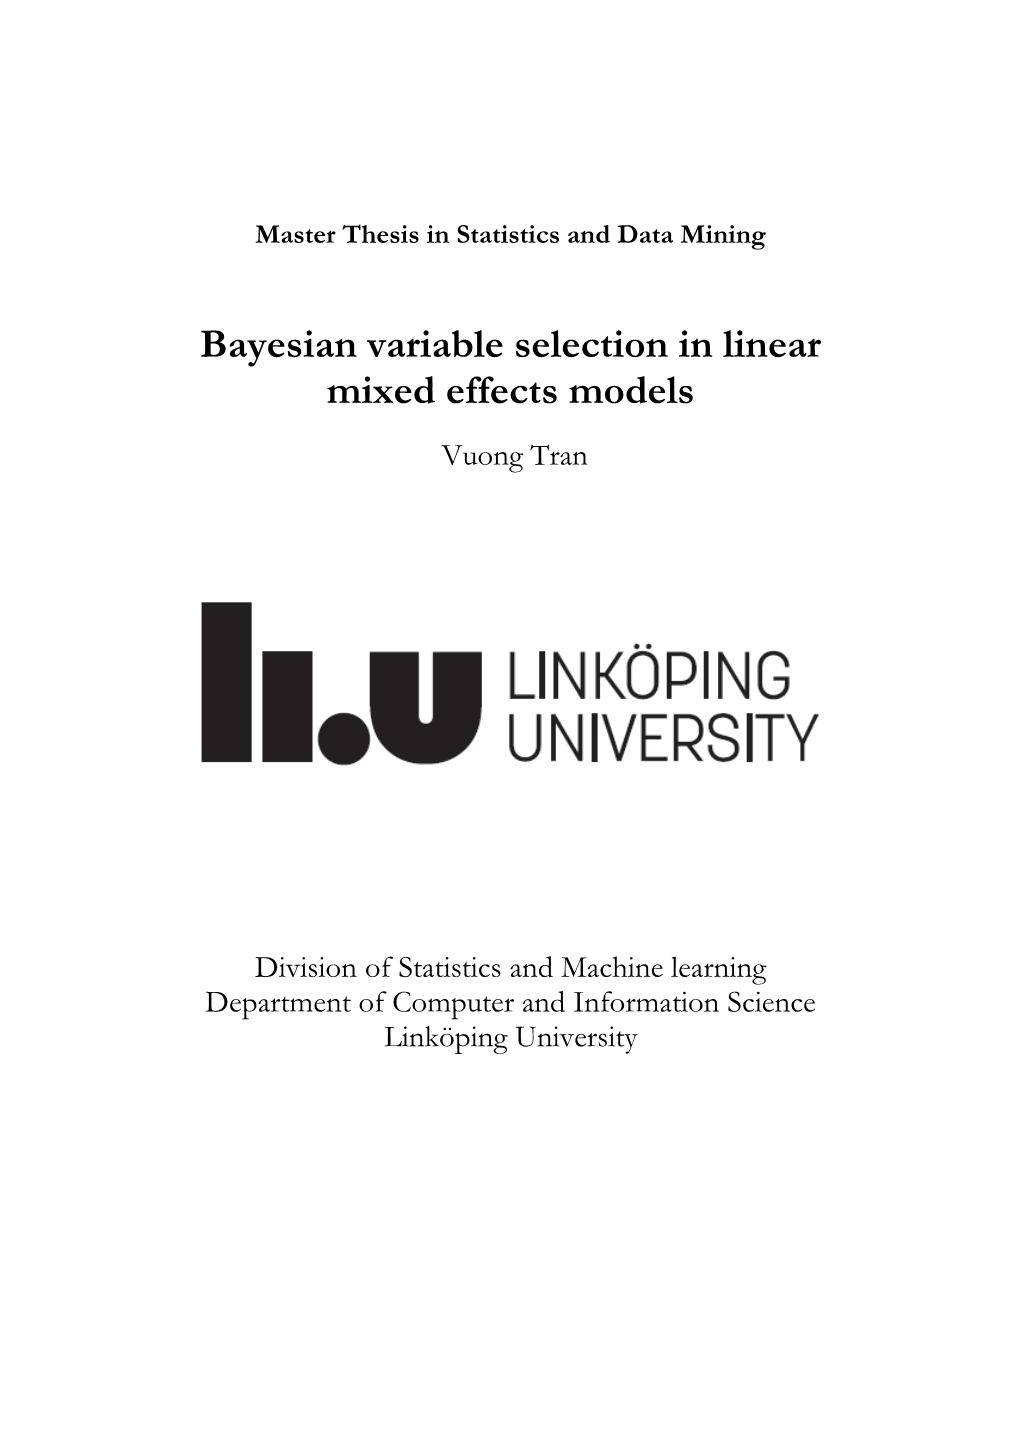 Bayesian Variable Selection in Linear Mixed Effects Models Vuong Tran